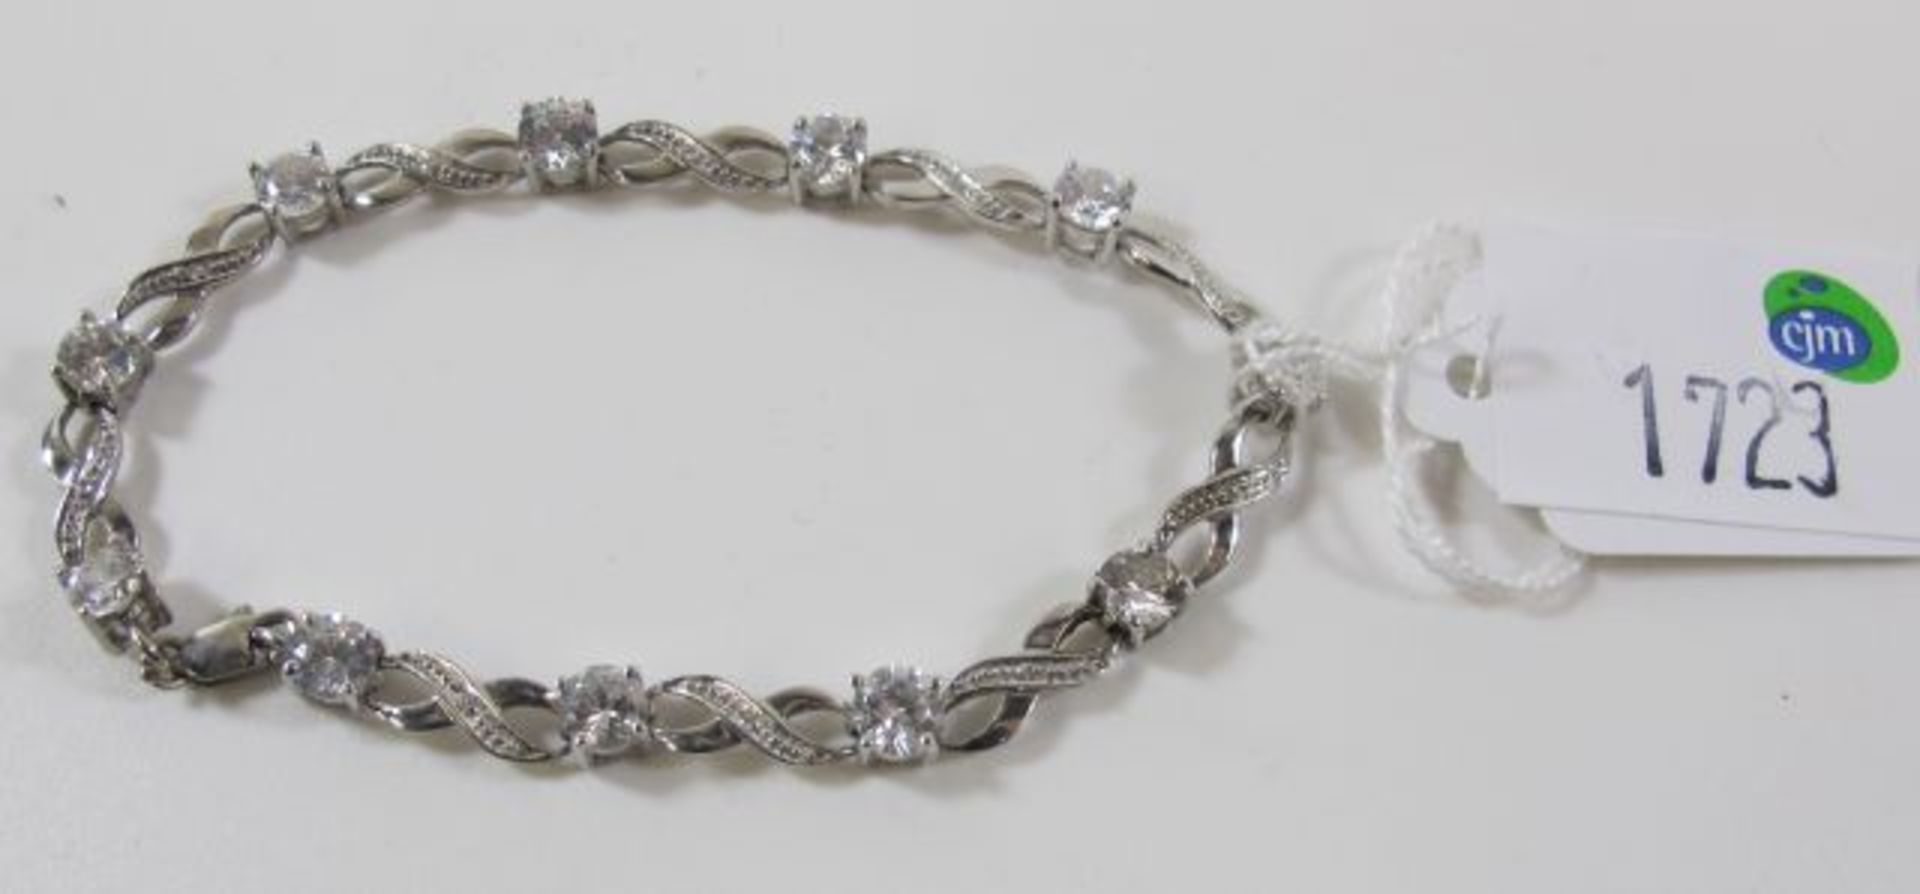 A 9ct White Gold Bracelet with Crystal Stones Diamond Set (est. £100-£150)